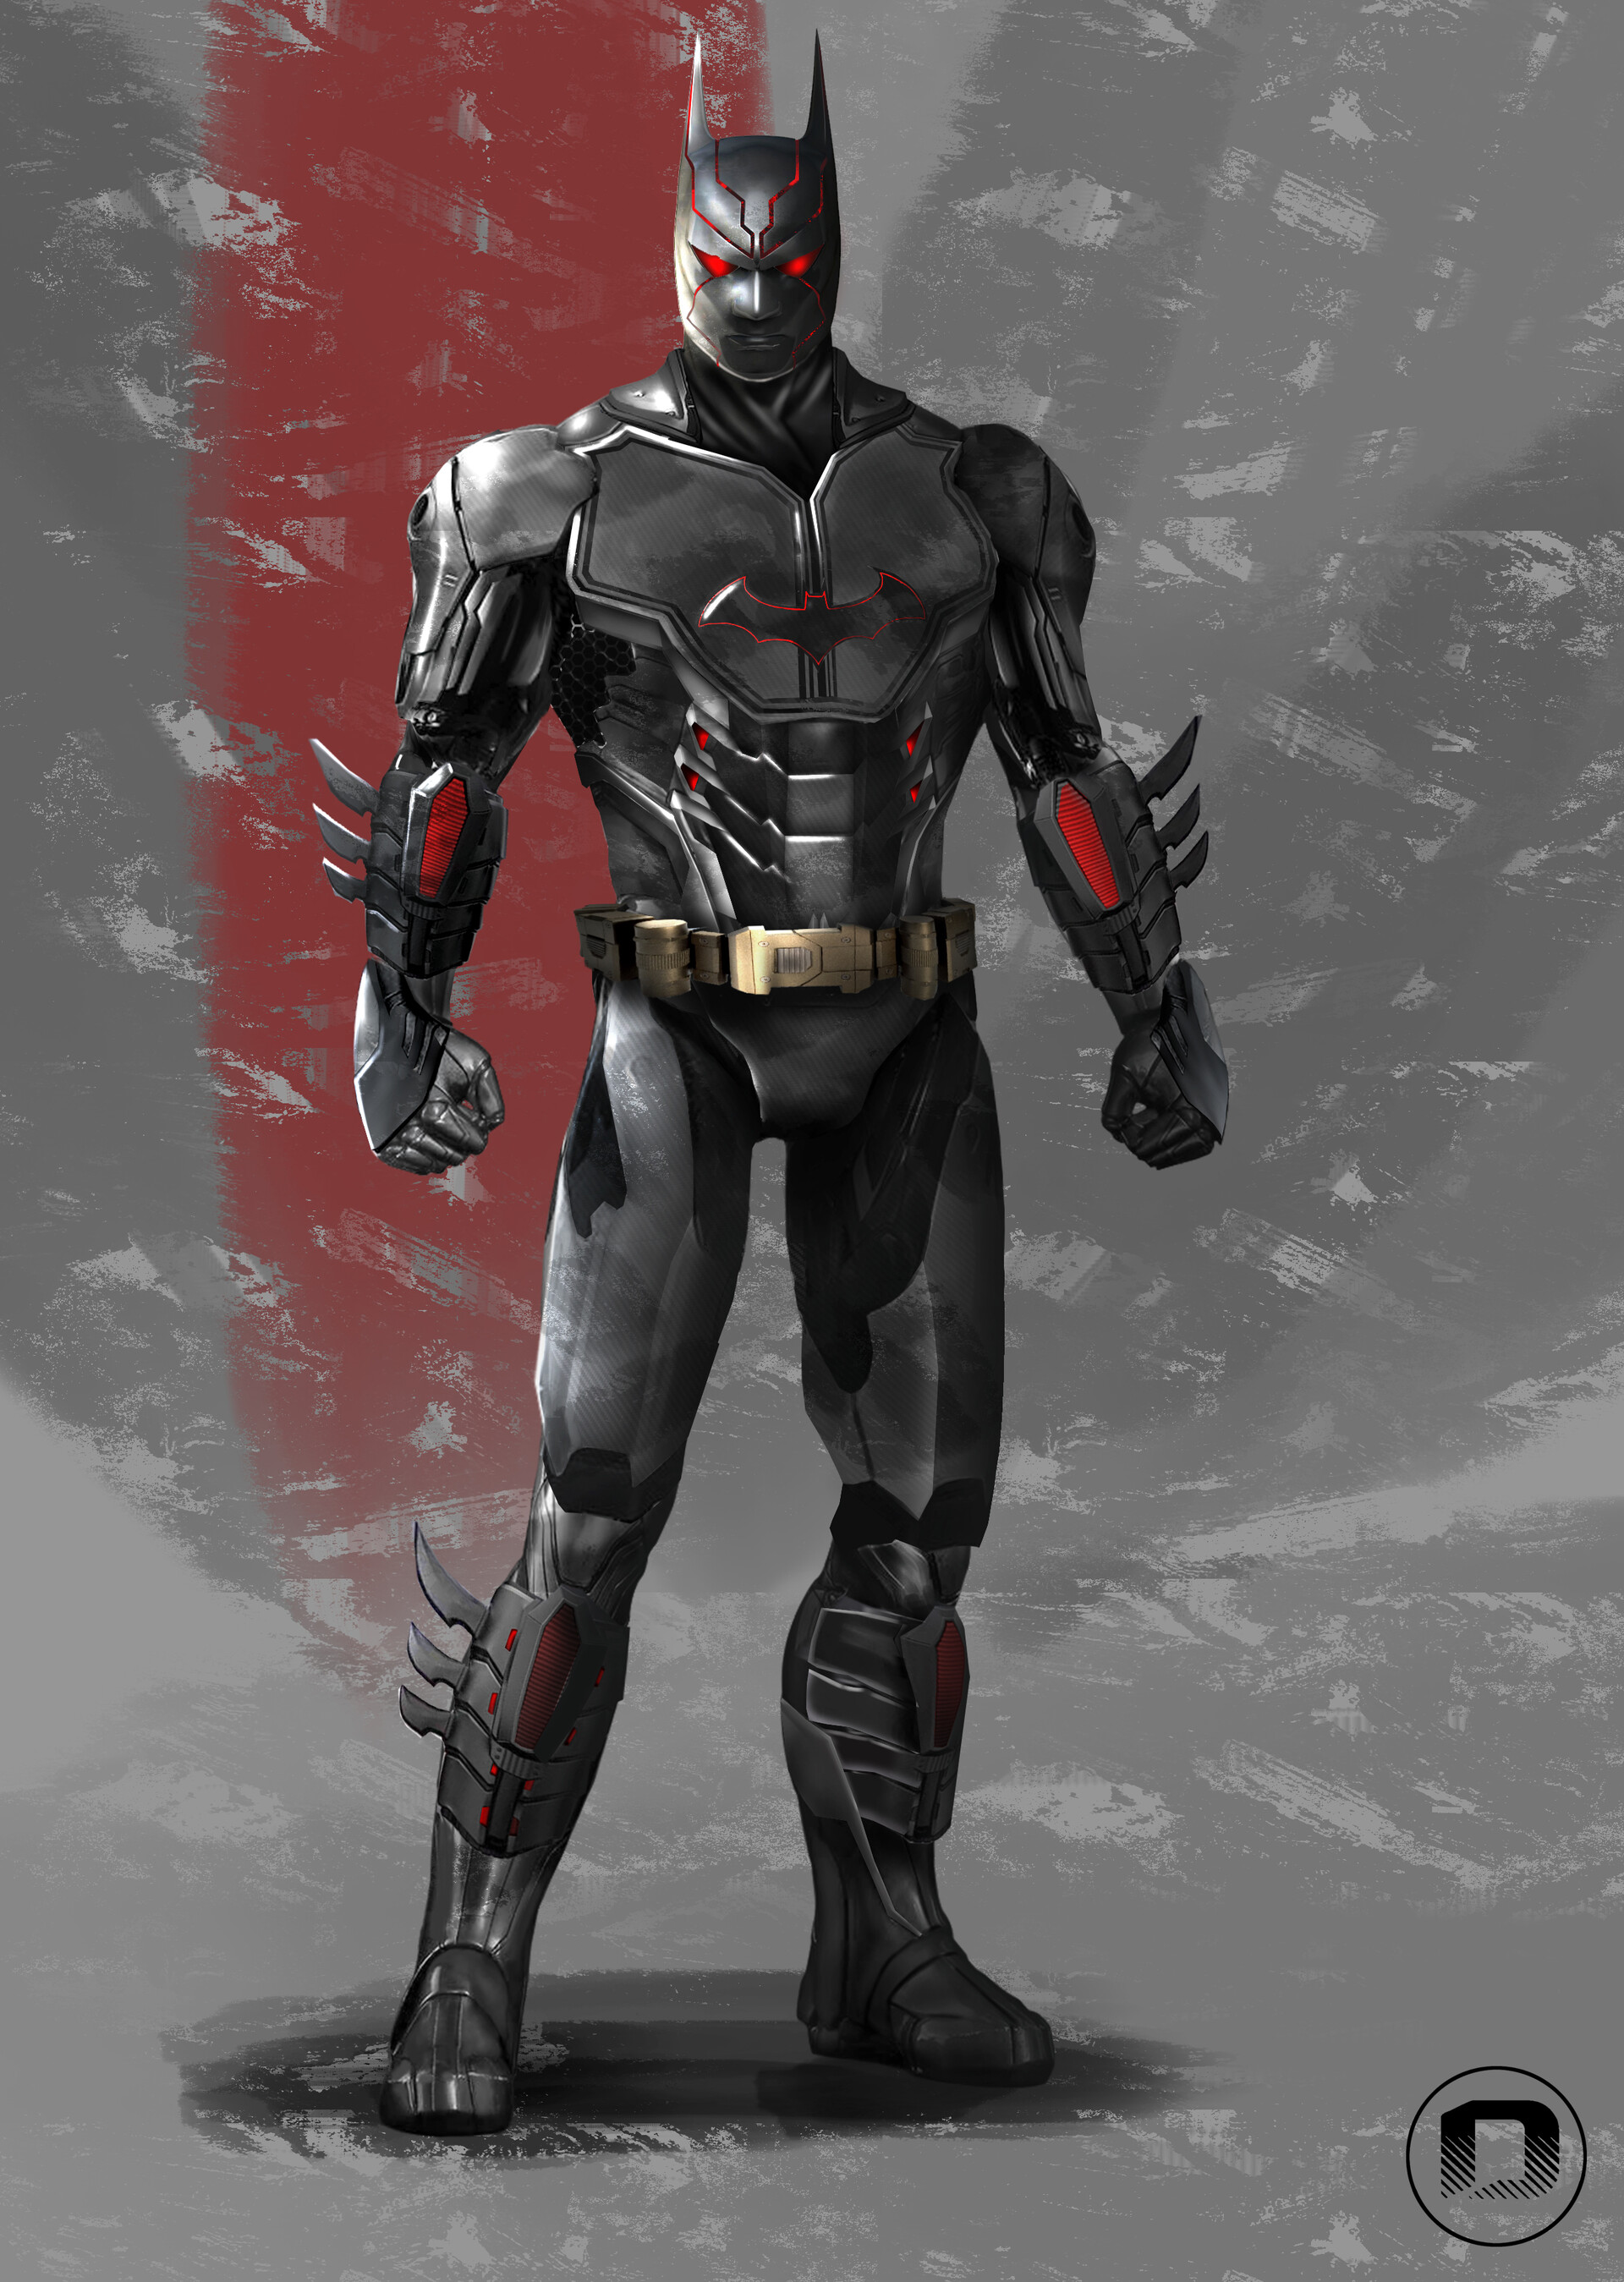 darwyn dan - Batman armorsuit concept